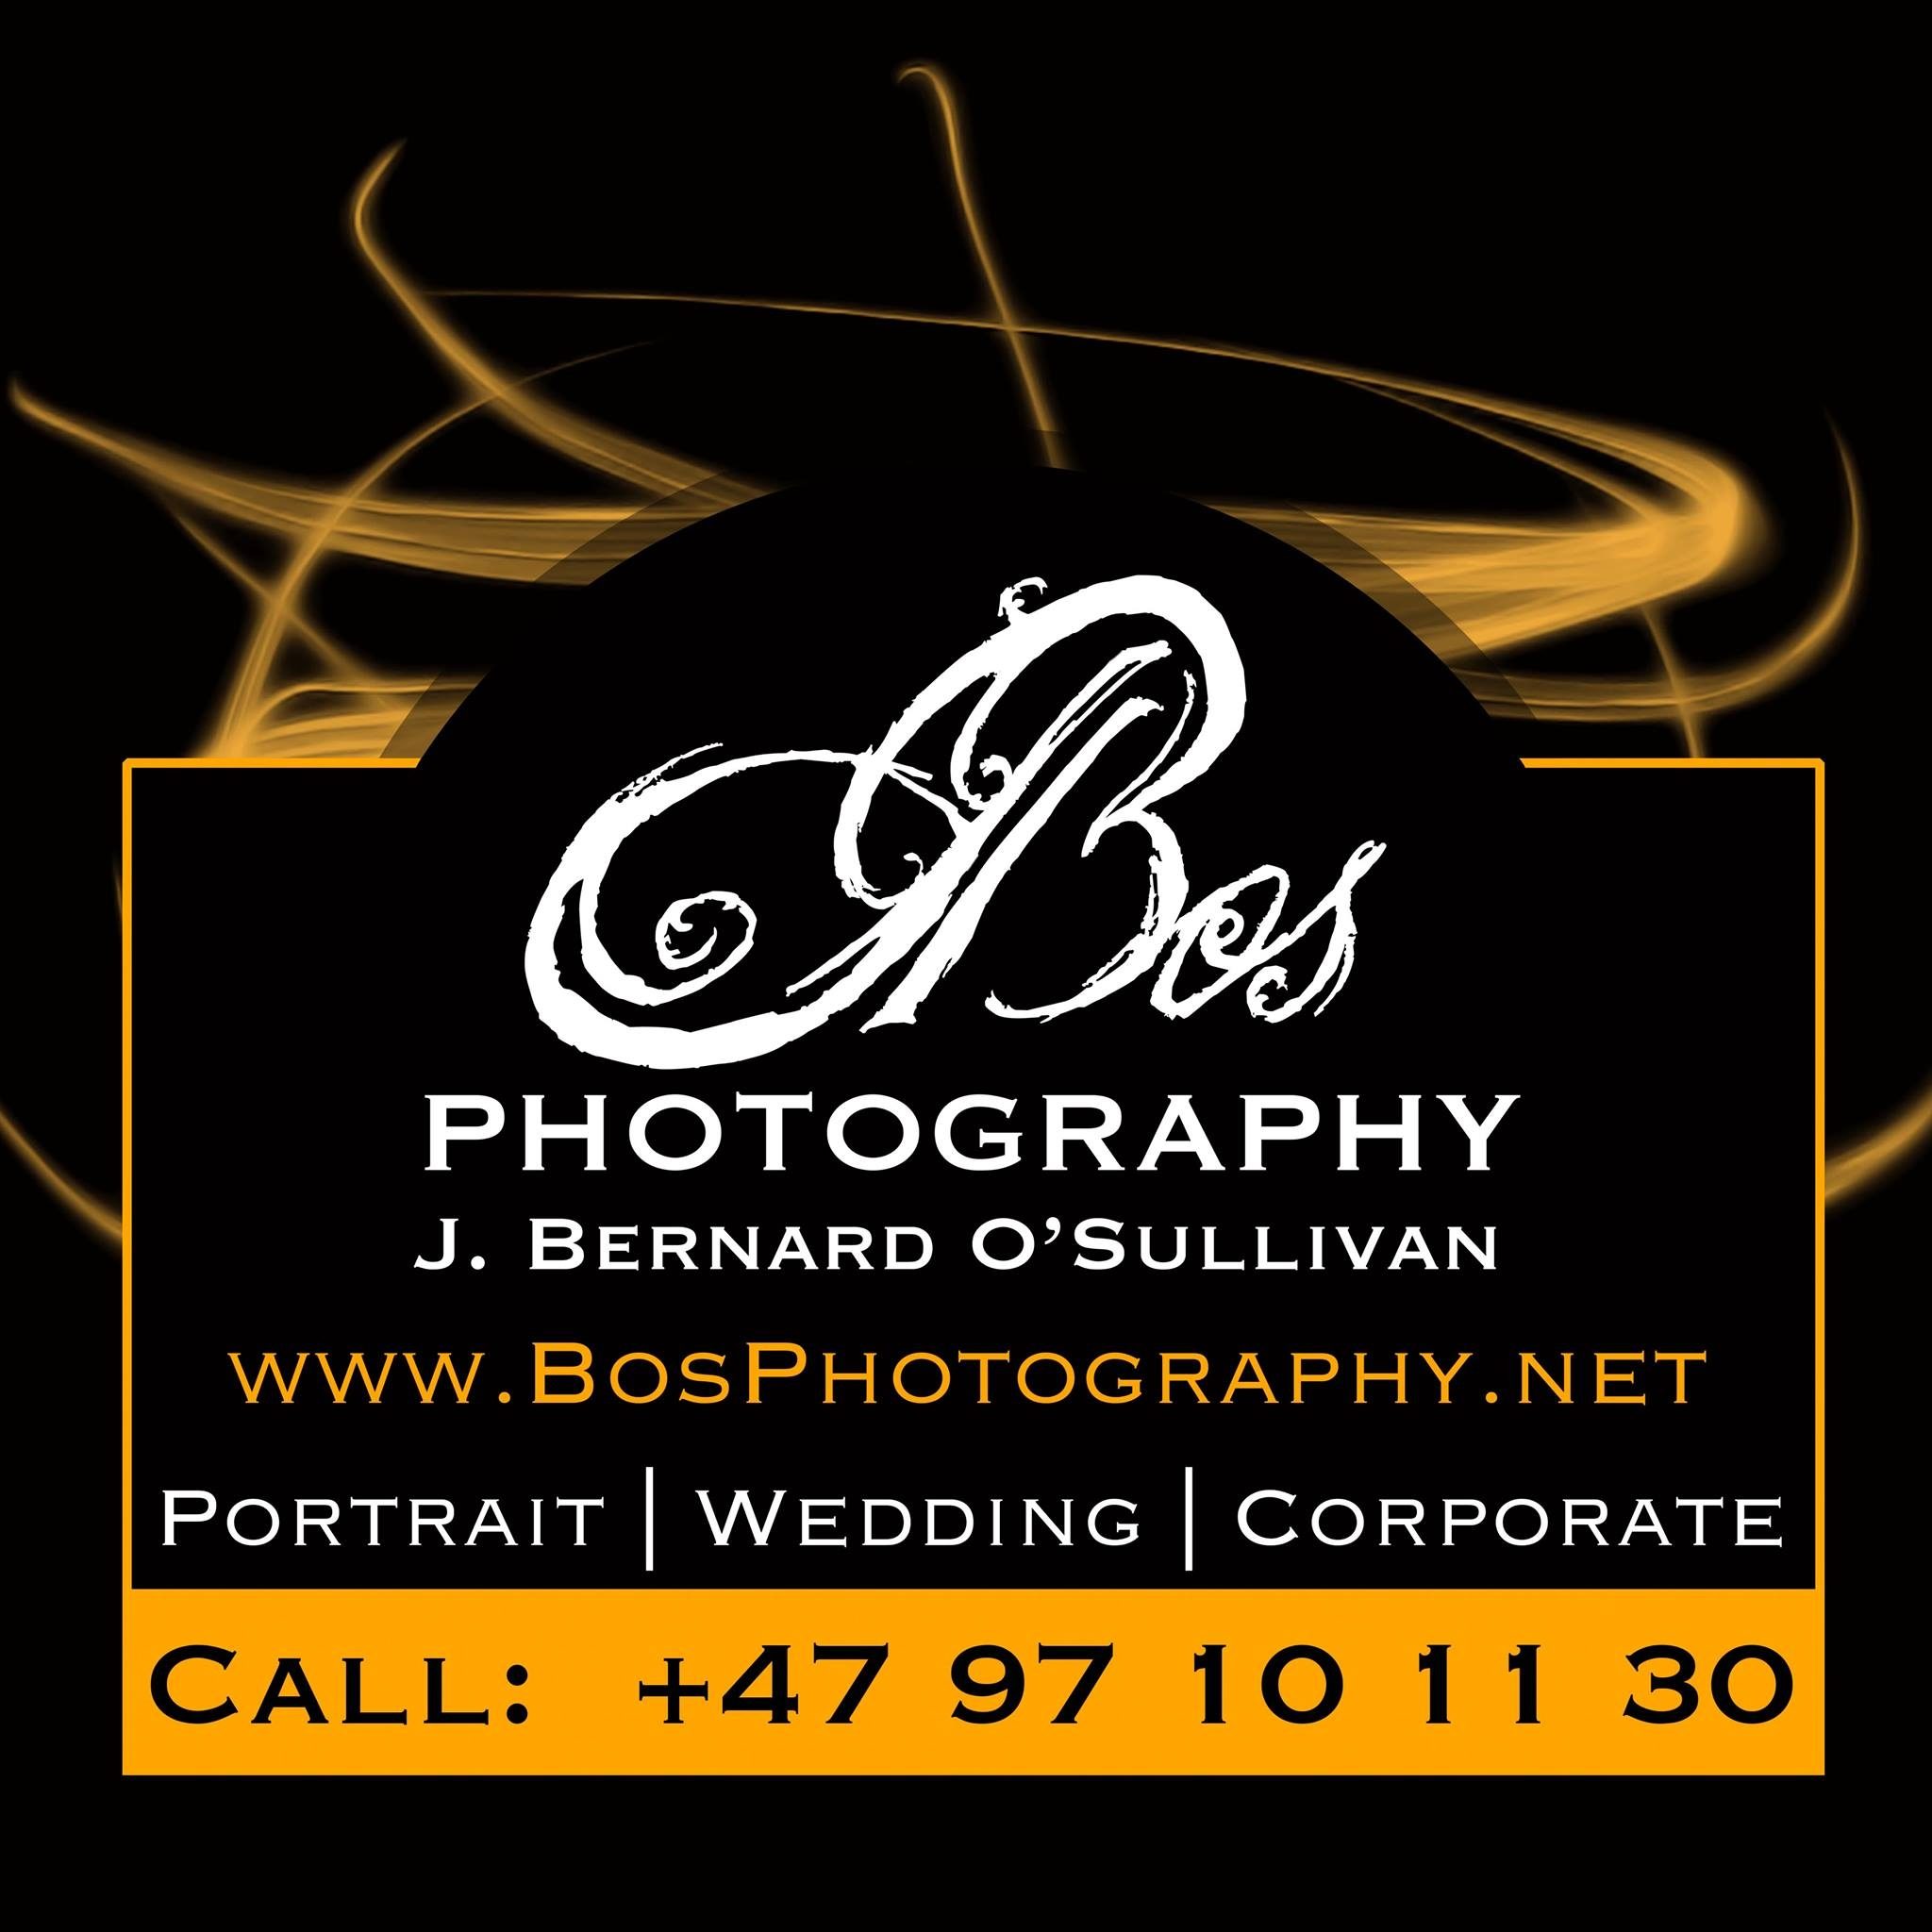 BosPhotography.net